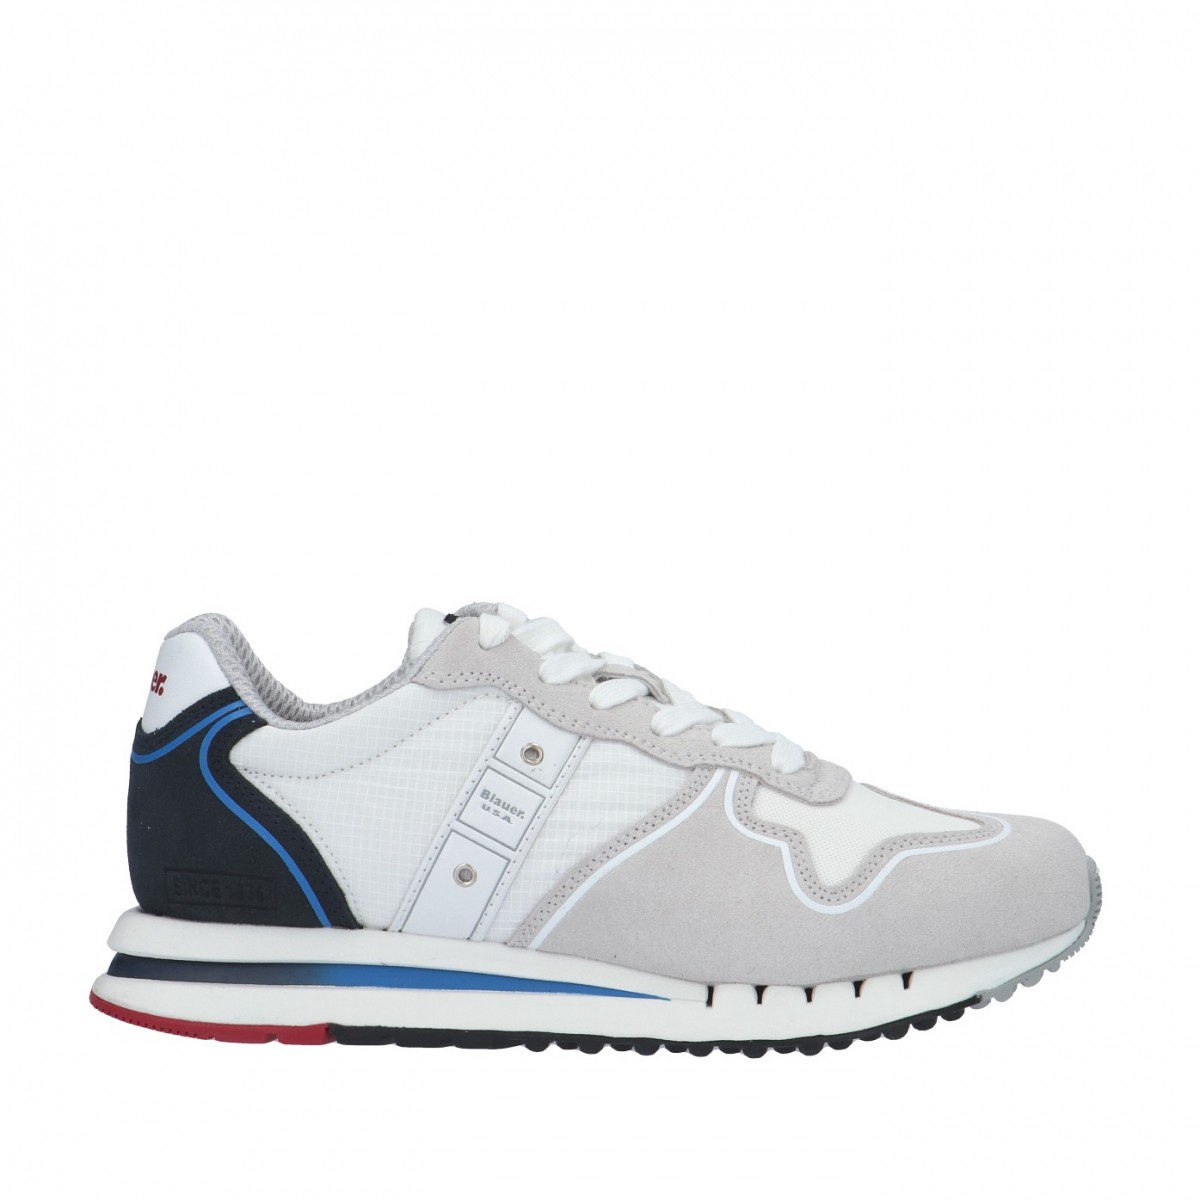 Blauer Sneaker Bianco/rosso/blu Gomma S3QUARTZ04/RIT